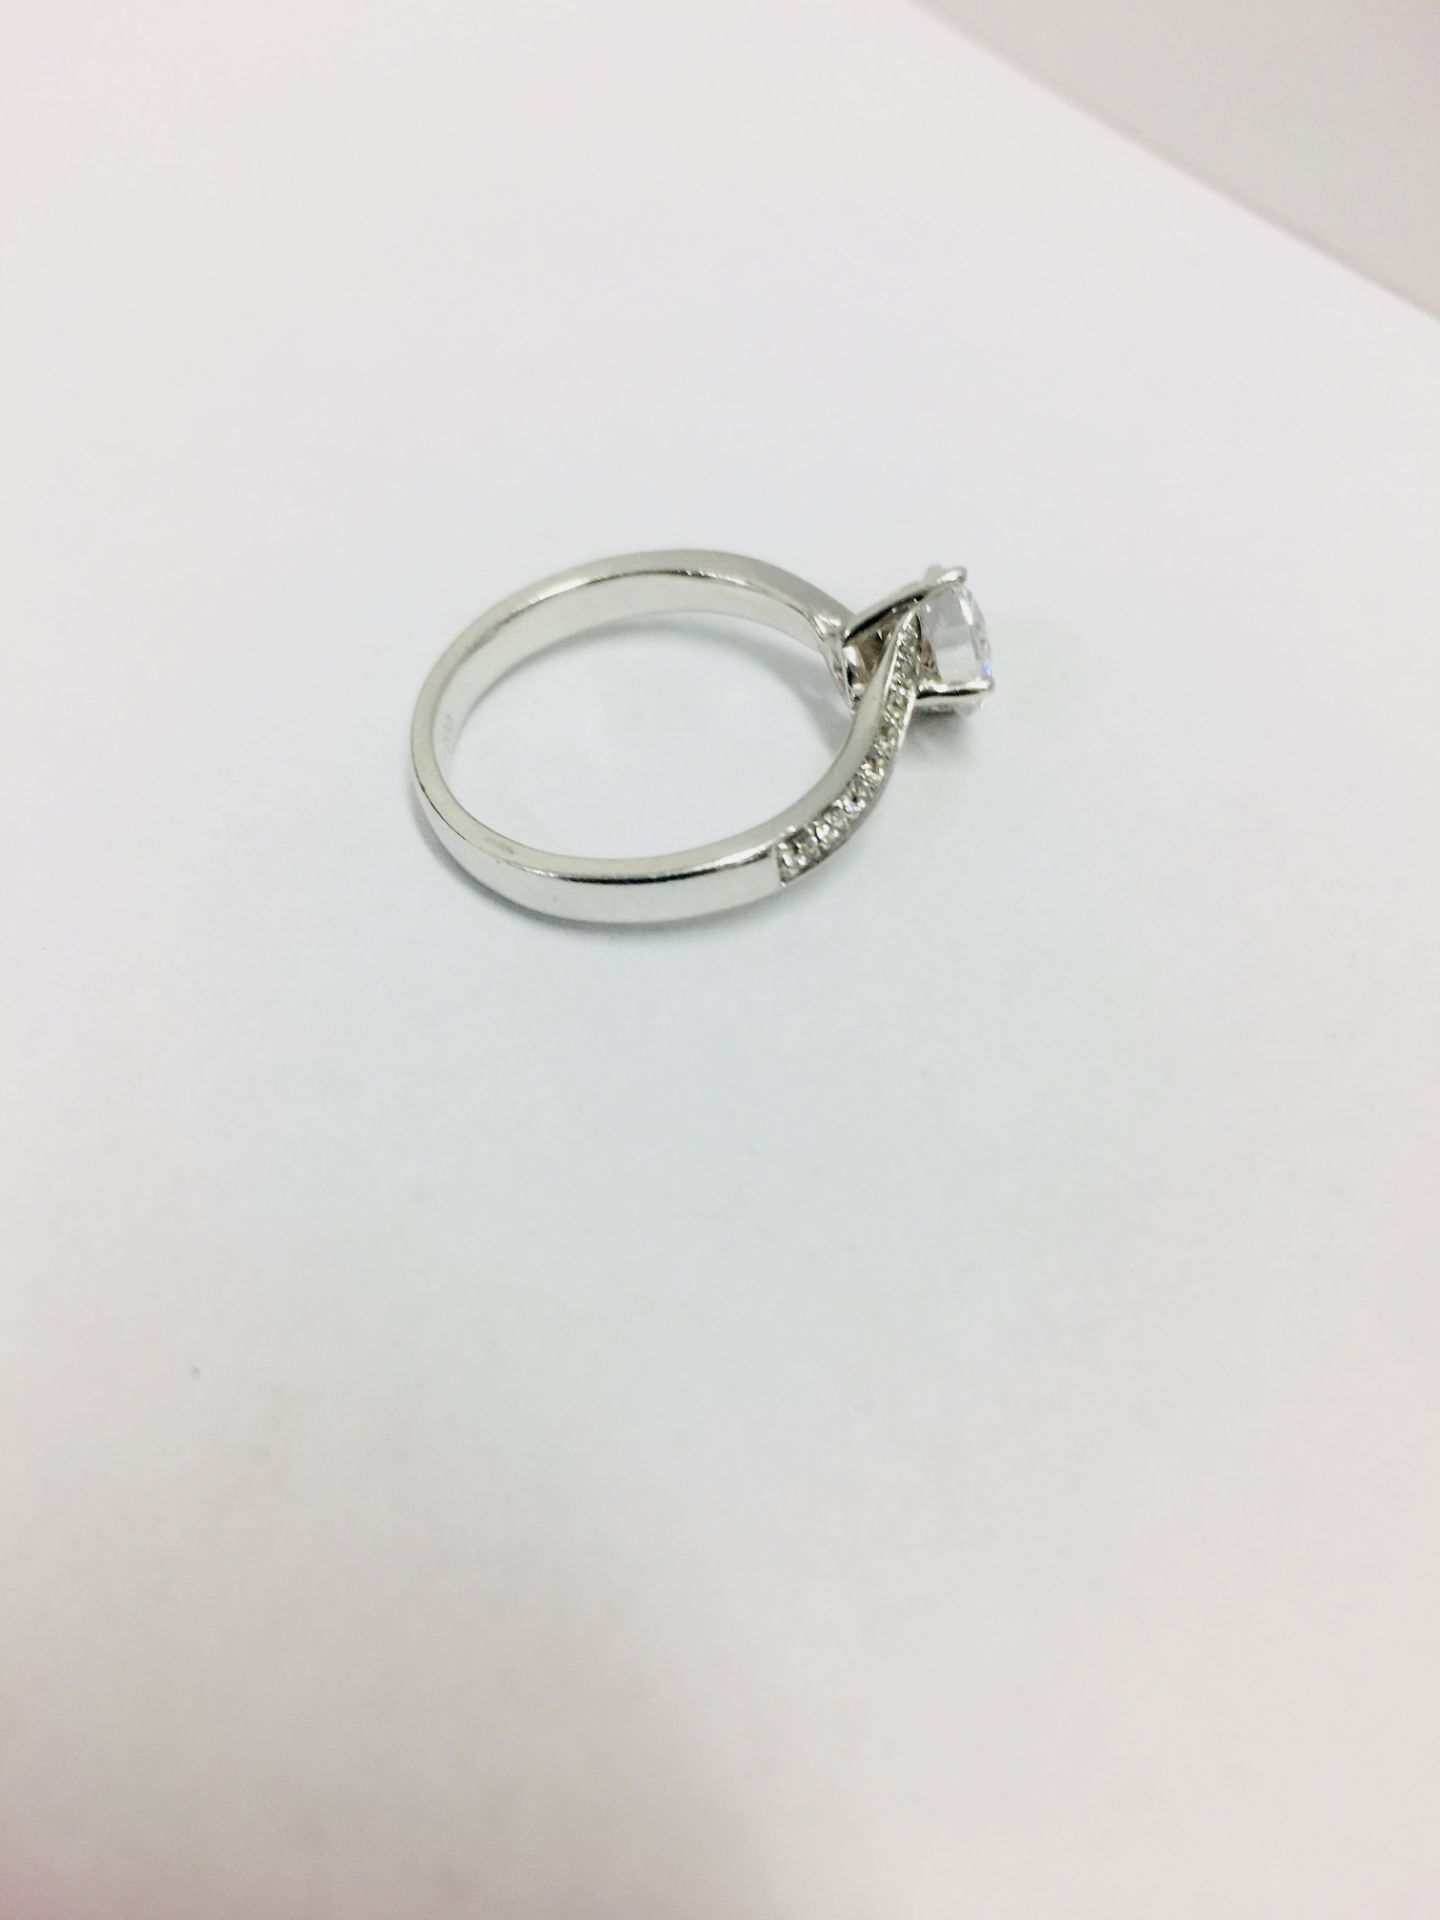 Platinum twist diamond solitaire ring,0.50ct brilliant cut diamond,h colour vs clarity - Image 3 of 6